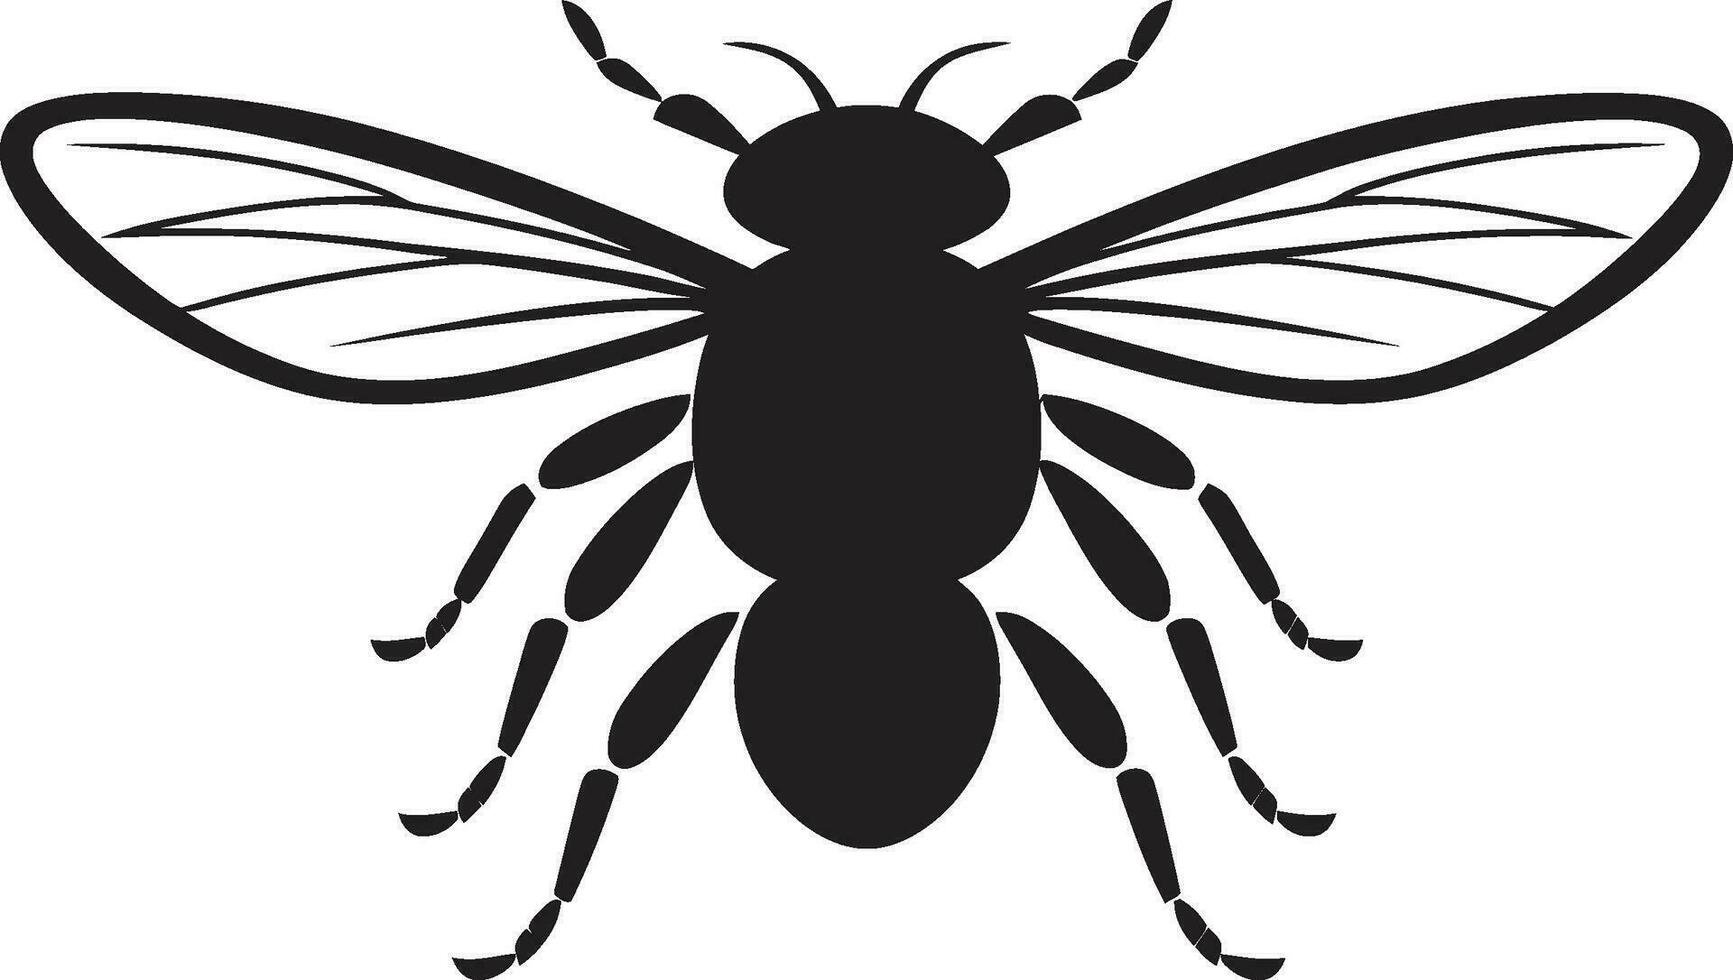 giftig insekt vapen smyg tsetse flyga mark vektor